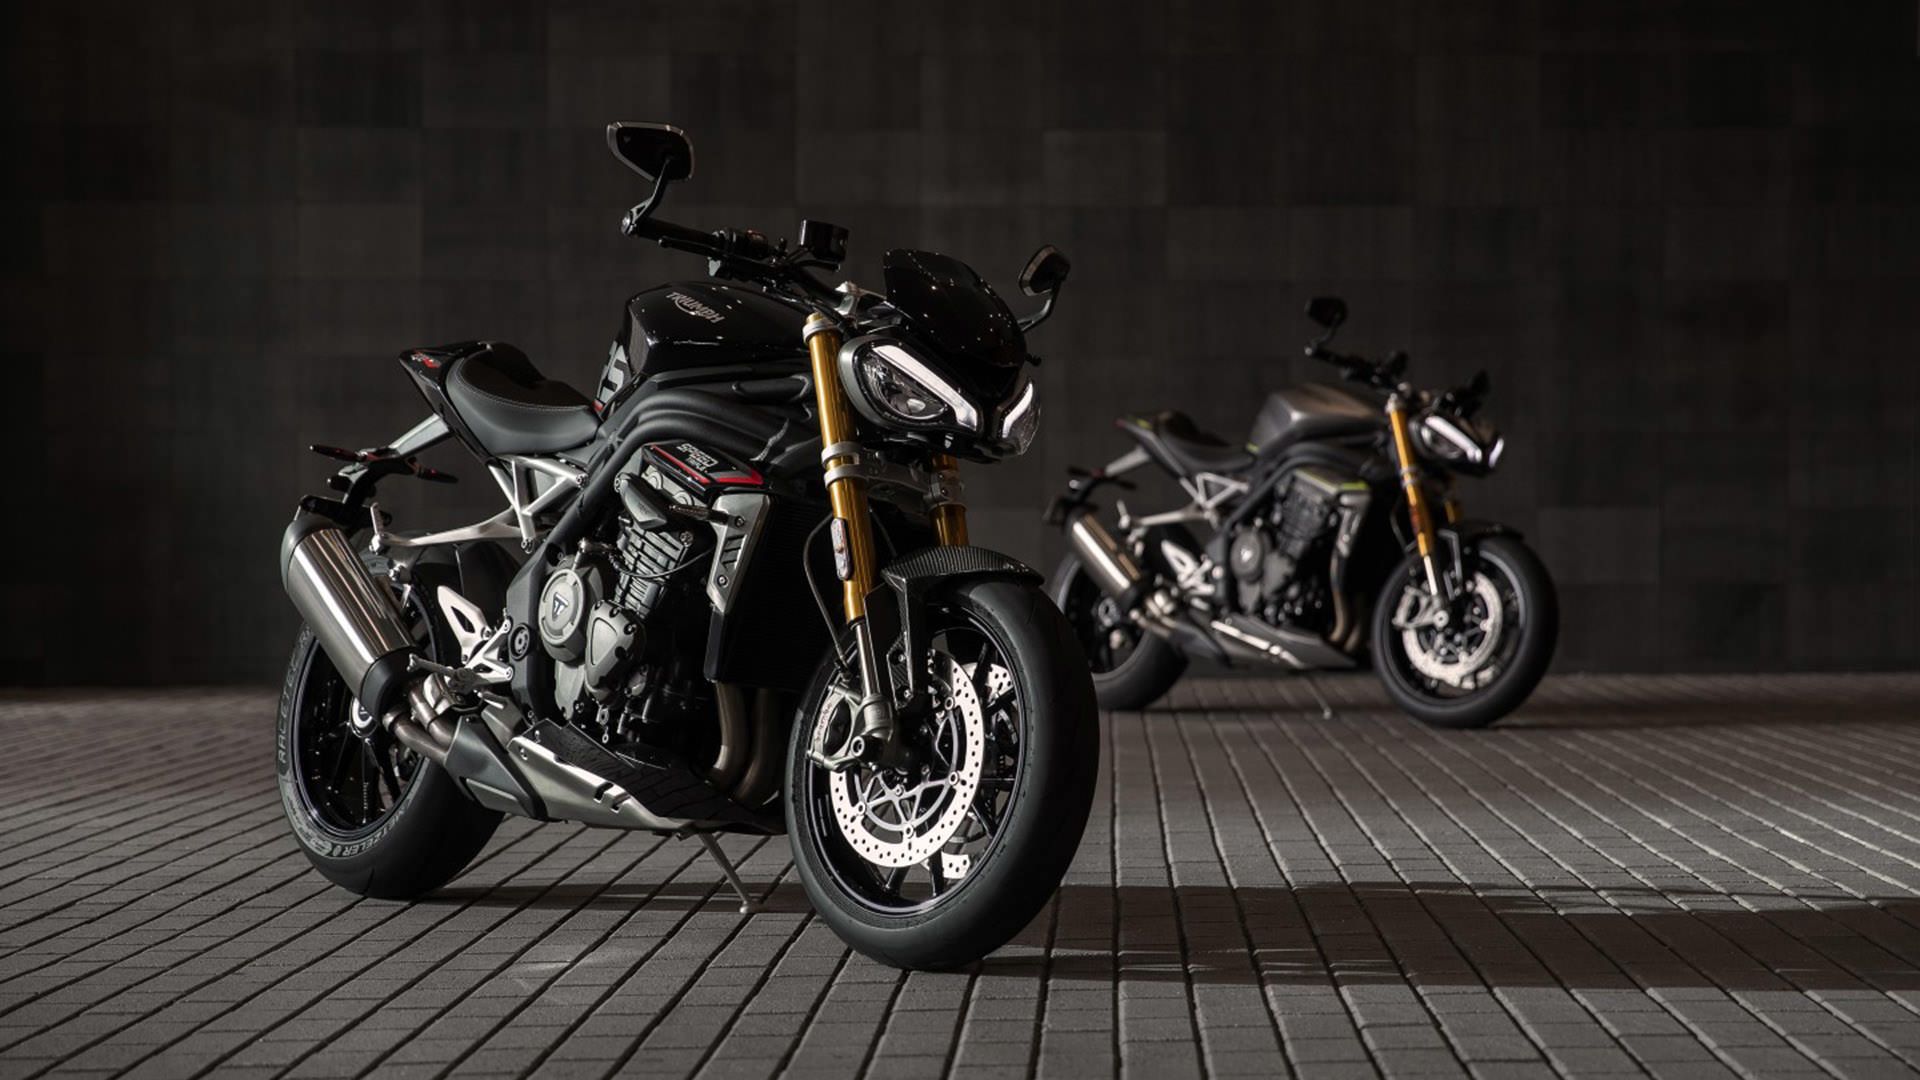 موتورسیکلت تریومف اسپید تریپل 1200 آر اس / Triumph Speed Triple 1200 RS 2021 Motorcycle سیاه رنگ